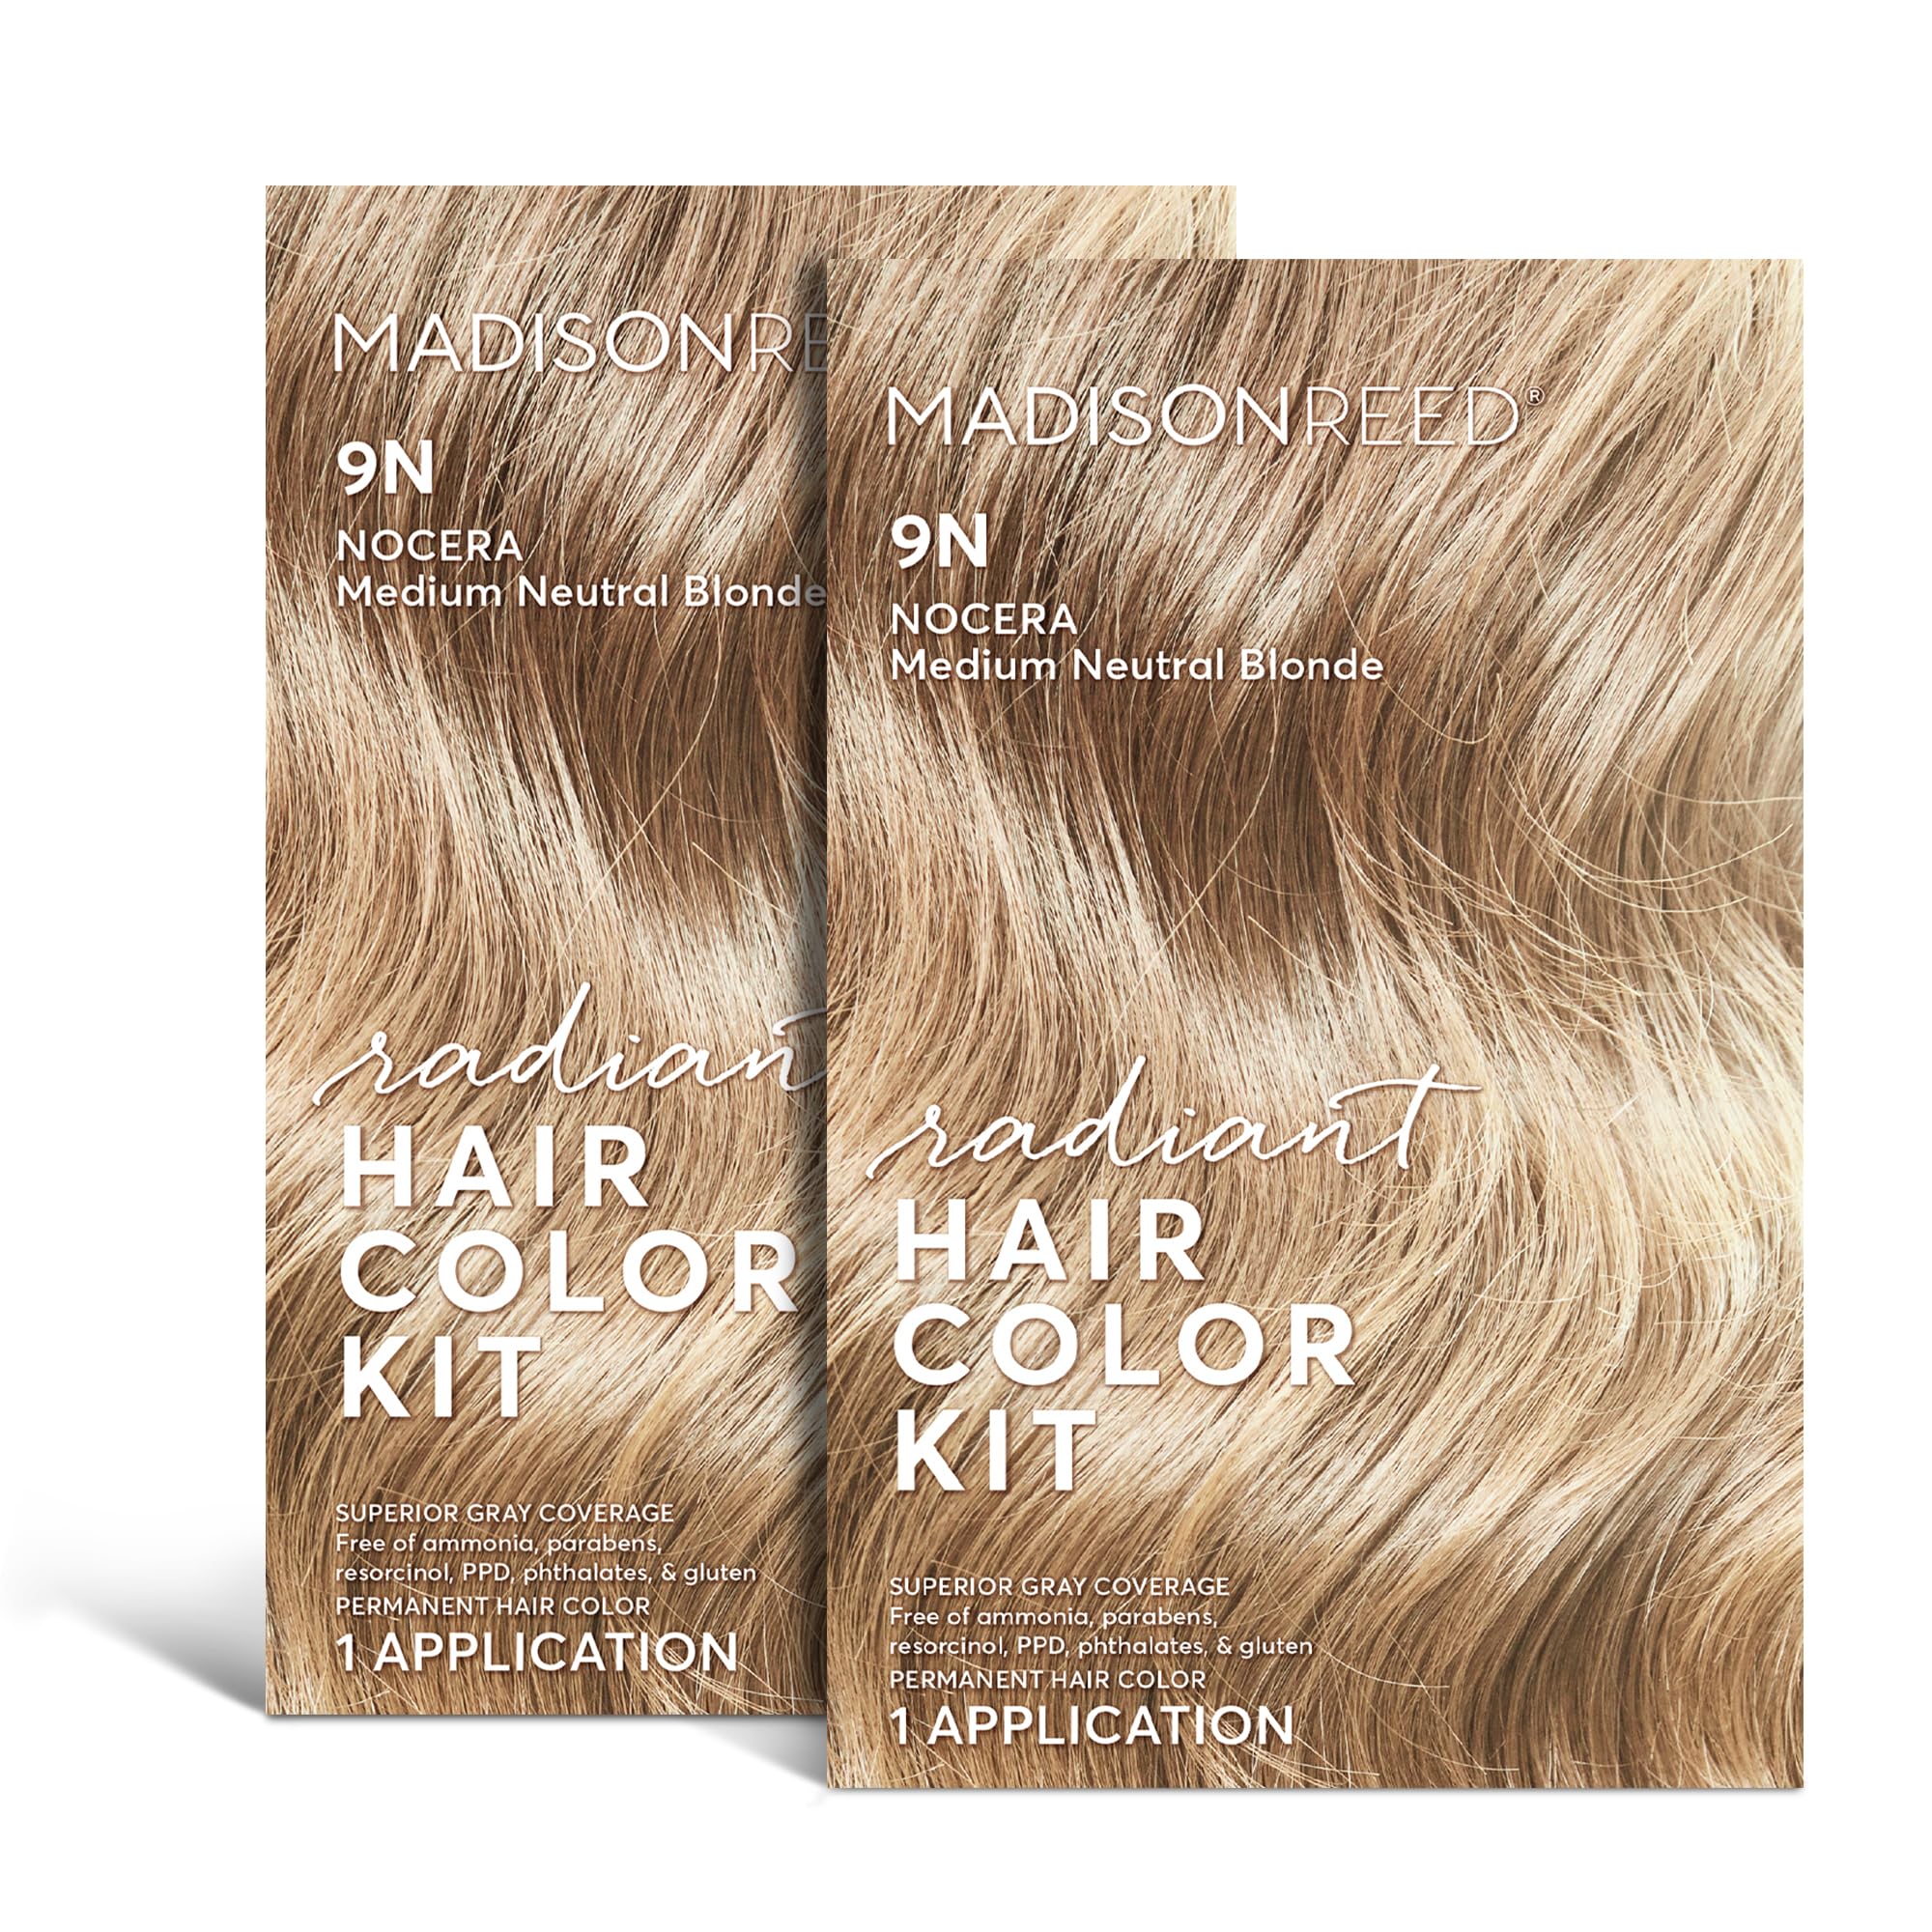 Mua Madison Reed Radiant Hair Color Kit, Medium Neutral Blonde for Superior  Gray Coverage, Ammonia-Free, 9N Nocera Blonde, Permanent Hair Dye, Pack of  2 trên  Mỹ chính hãng 2024